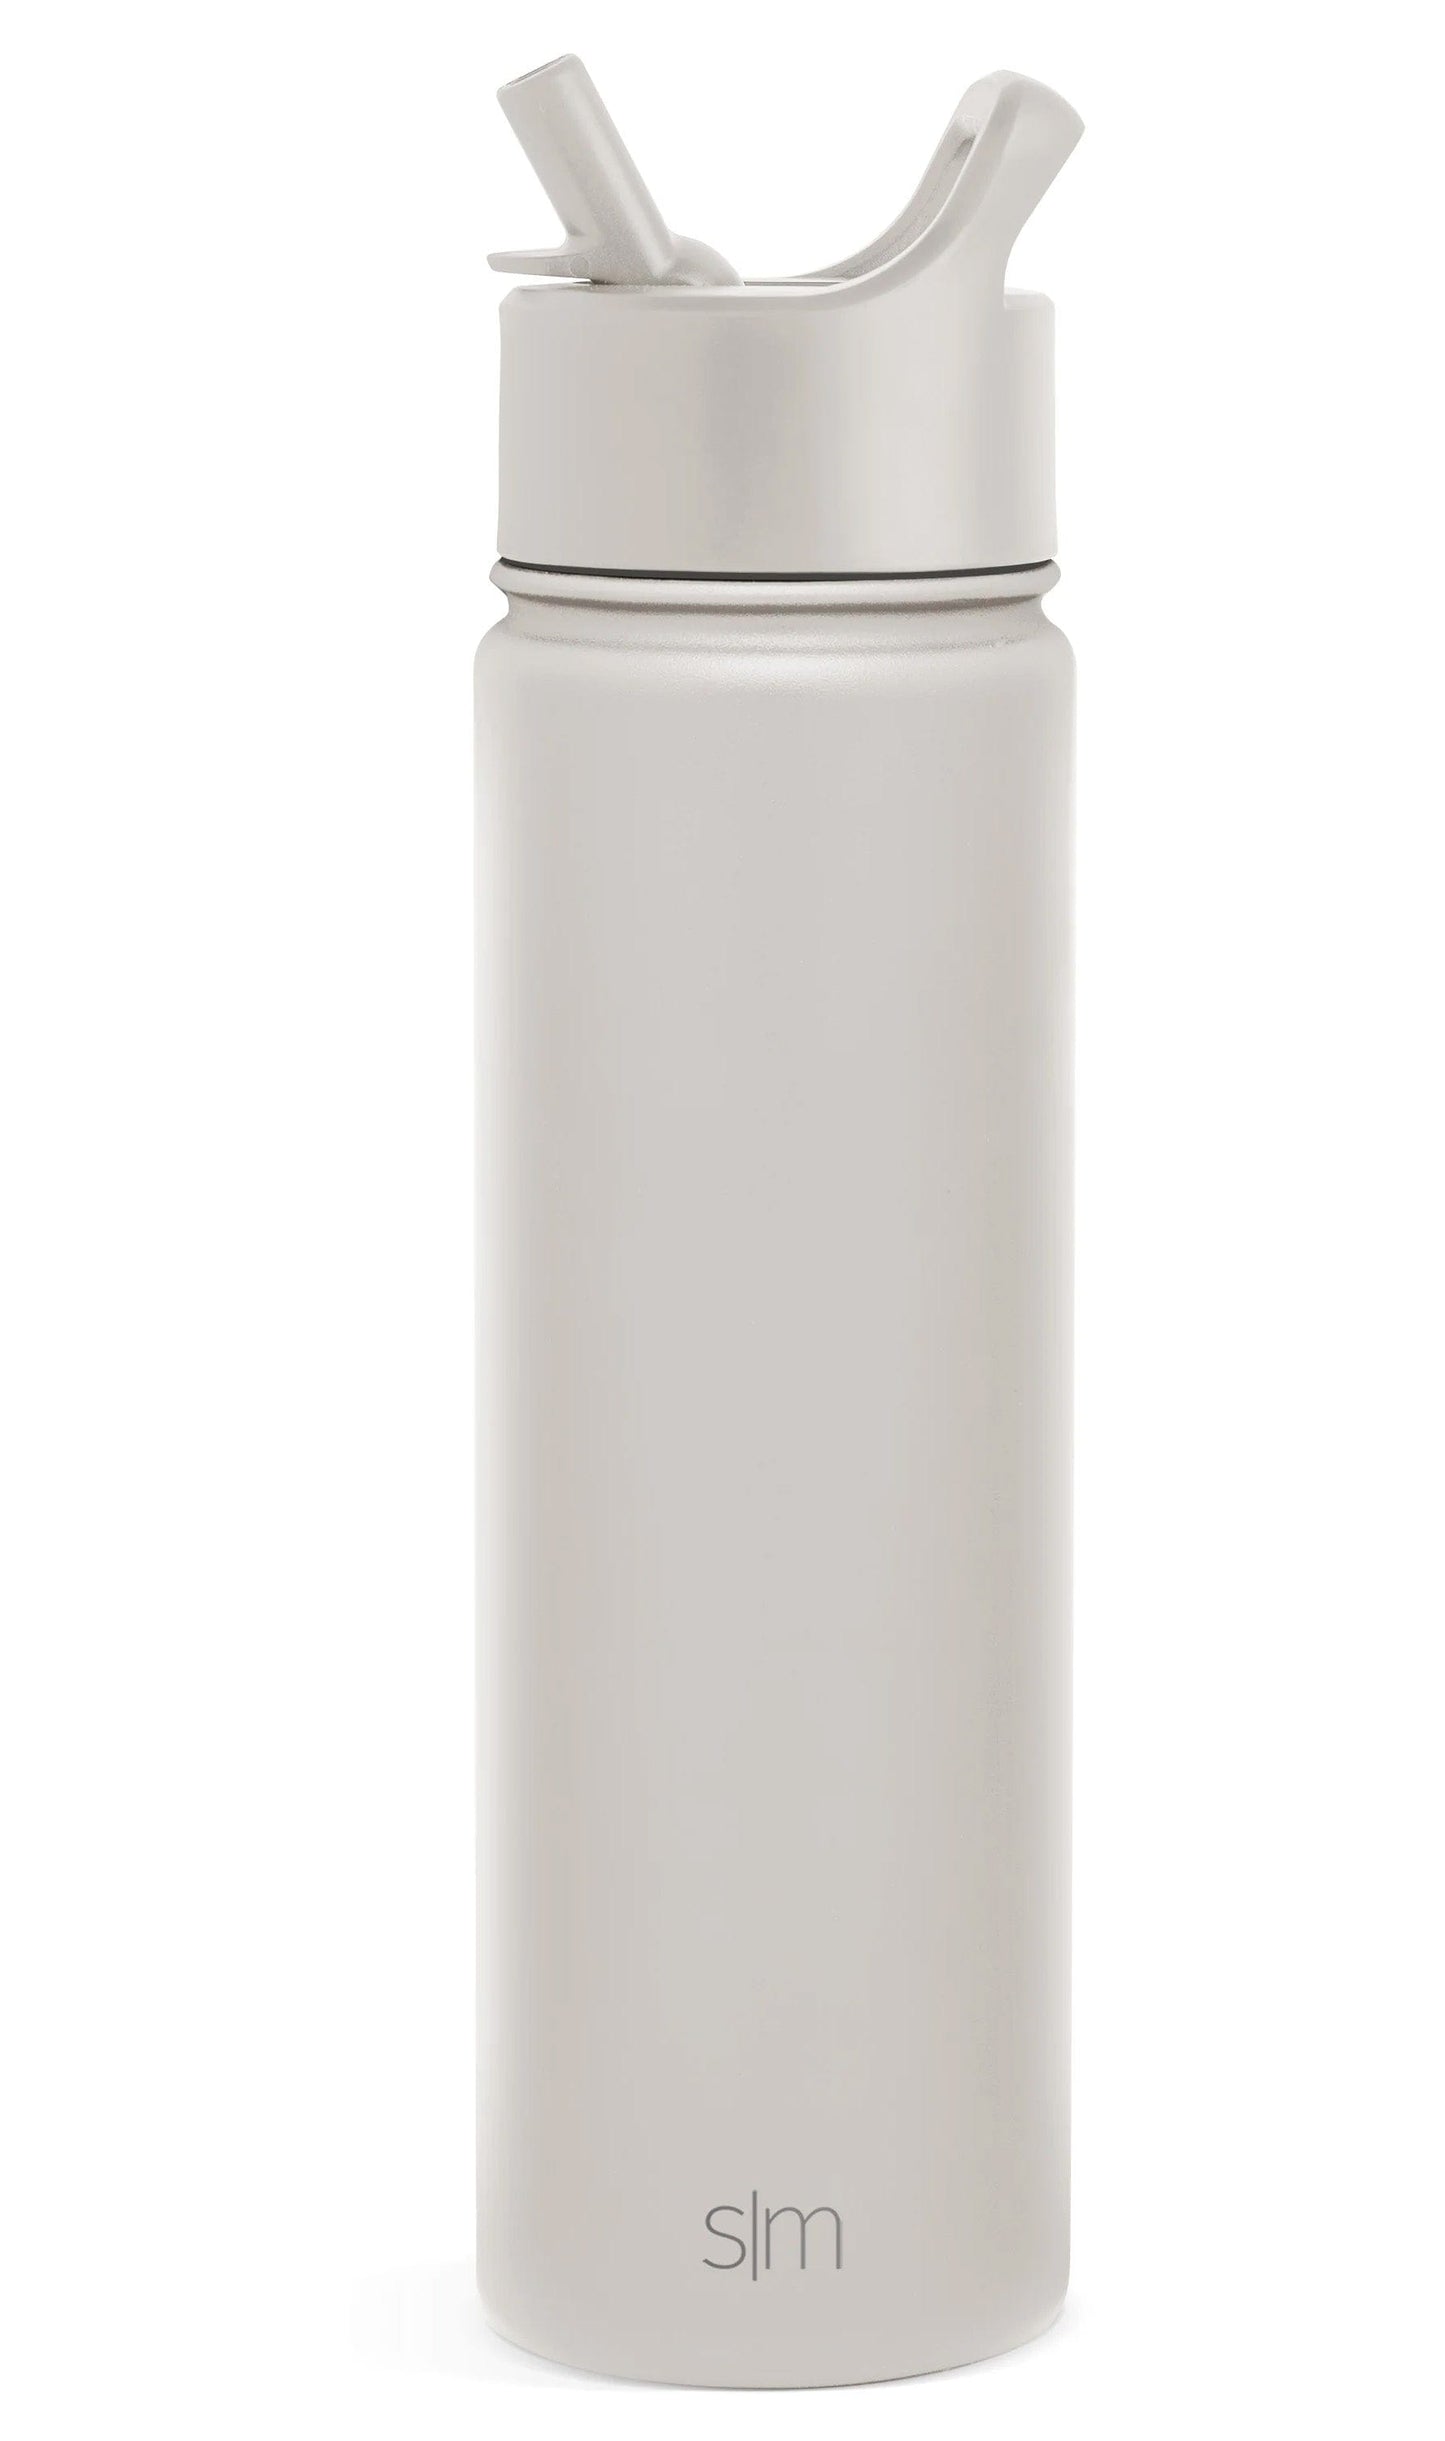 Custom Summit Water Bottle With Straw Lid - 22oz